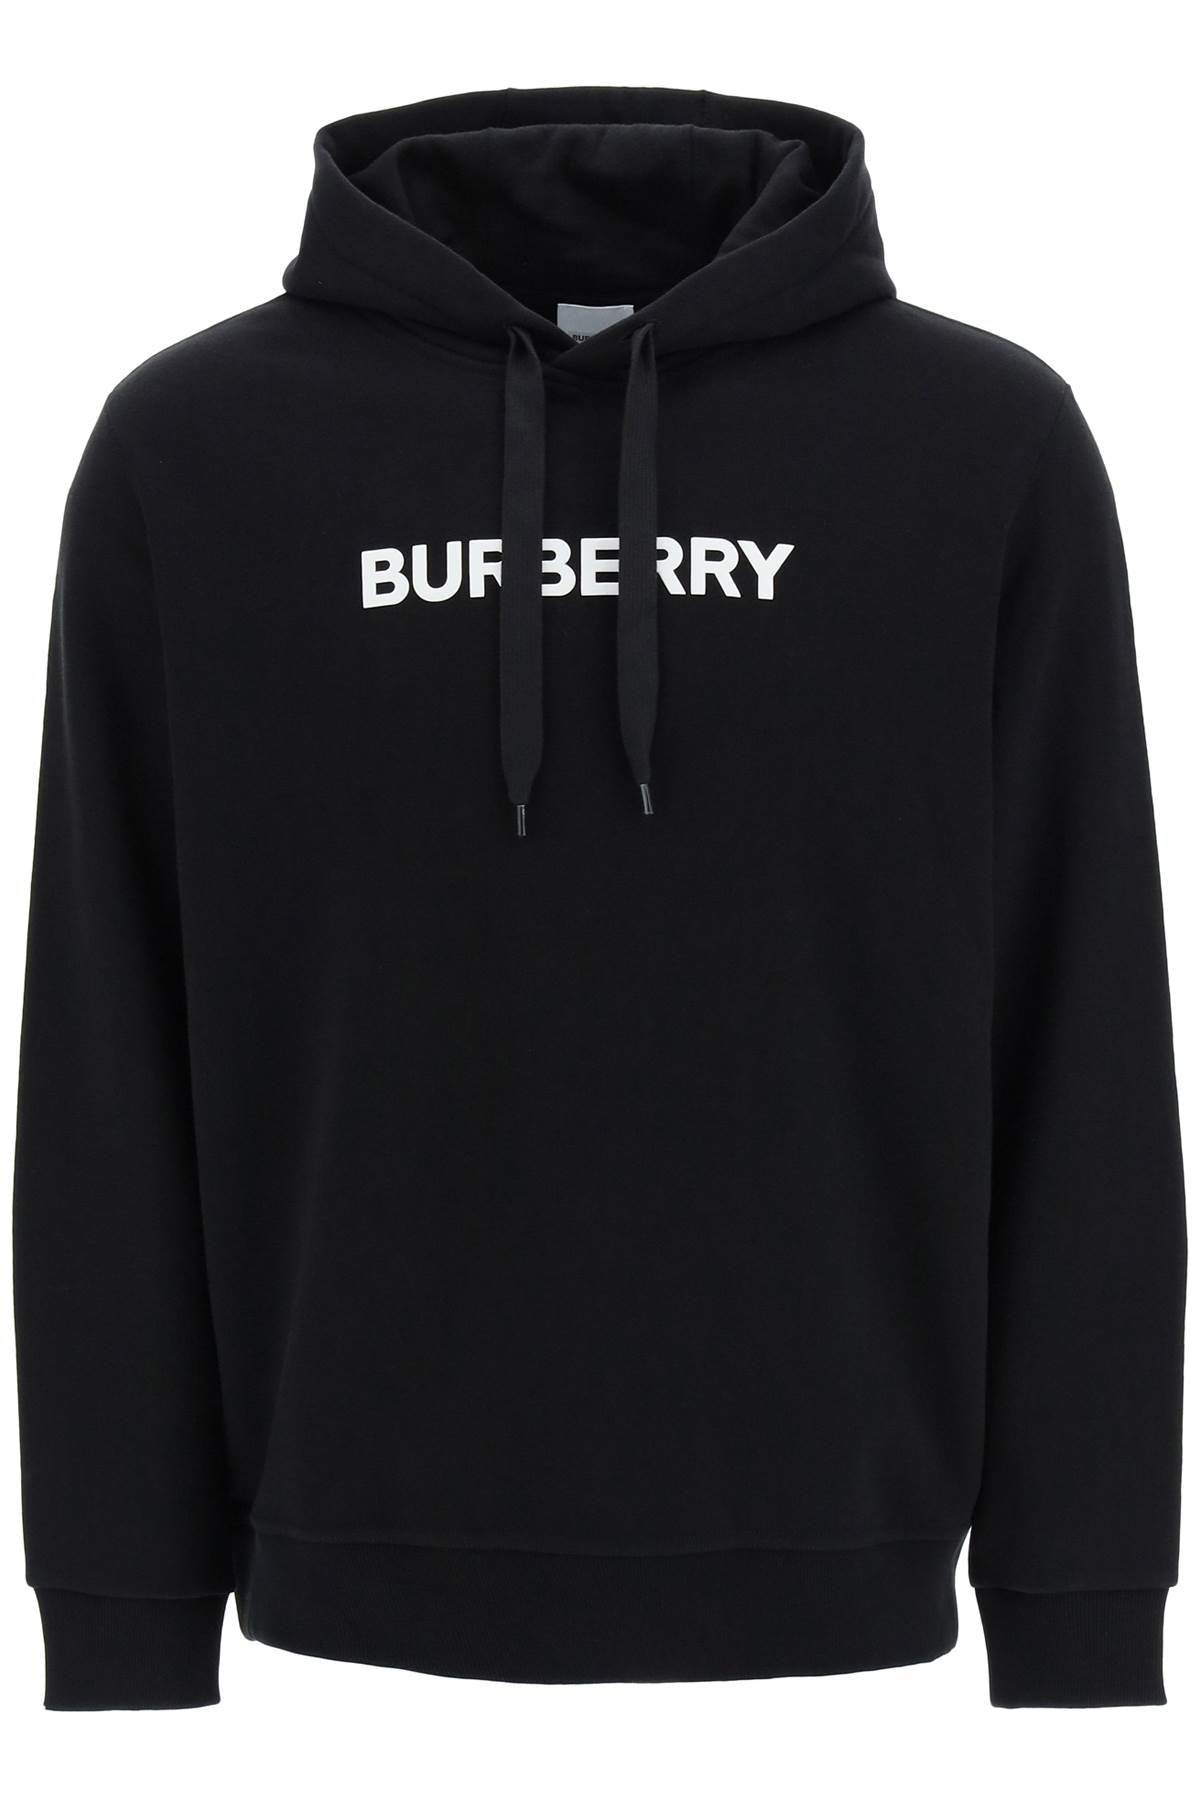 Burberry 標誌連帽衫 8055318 黑色